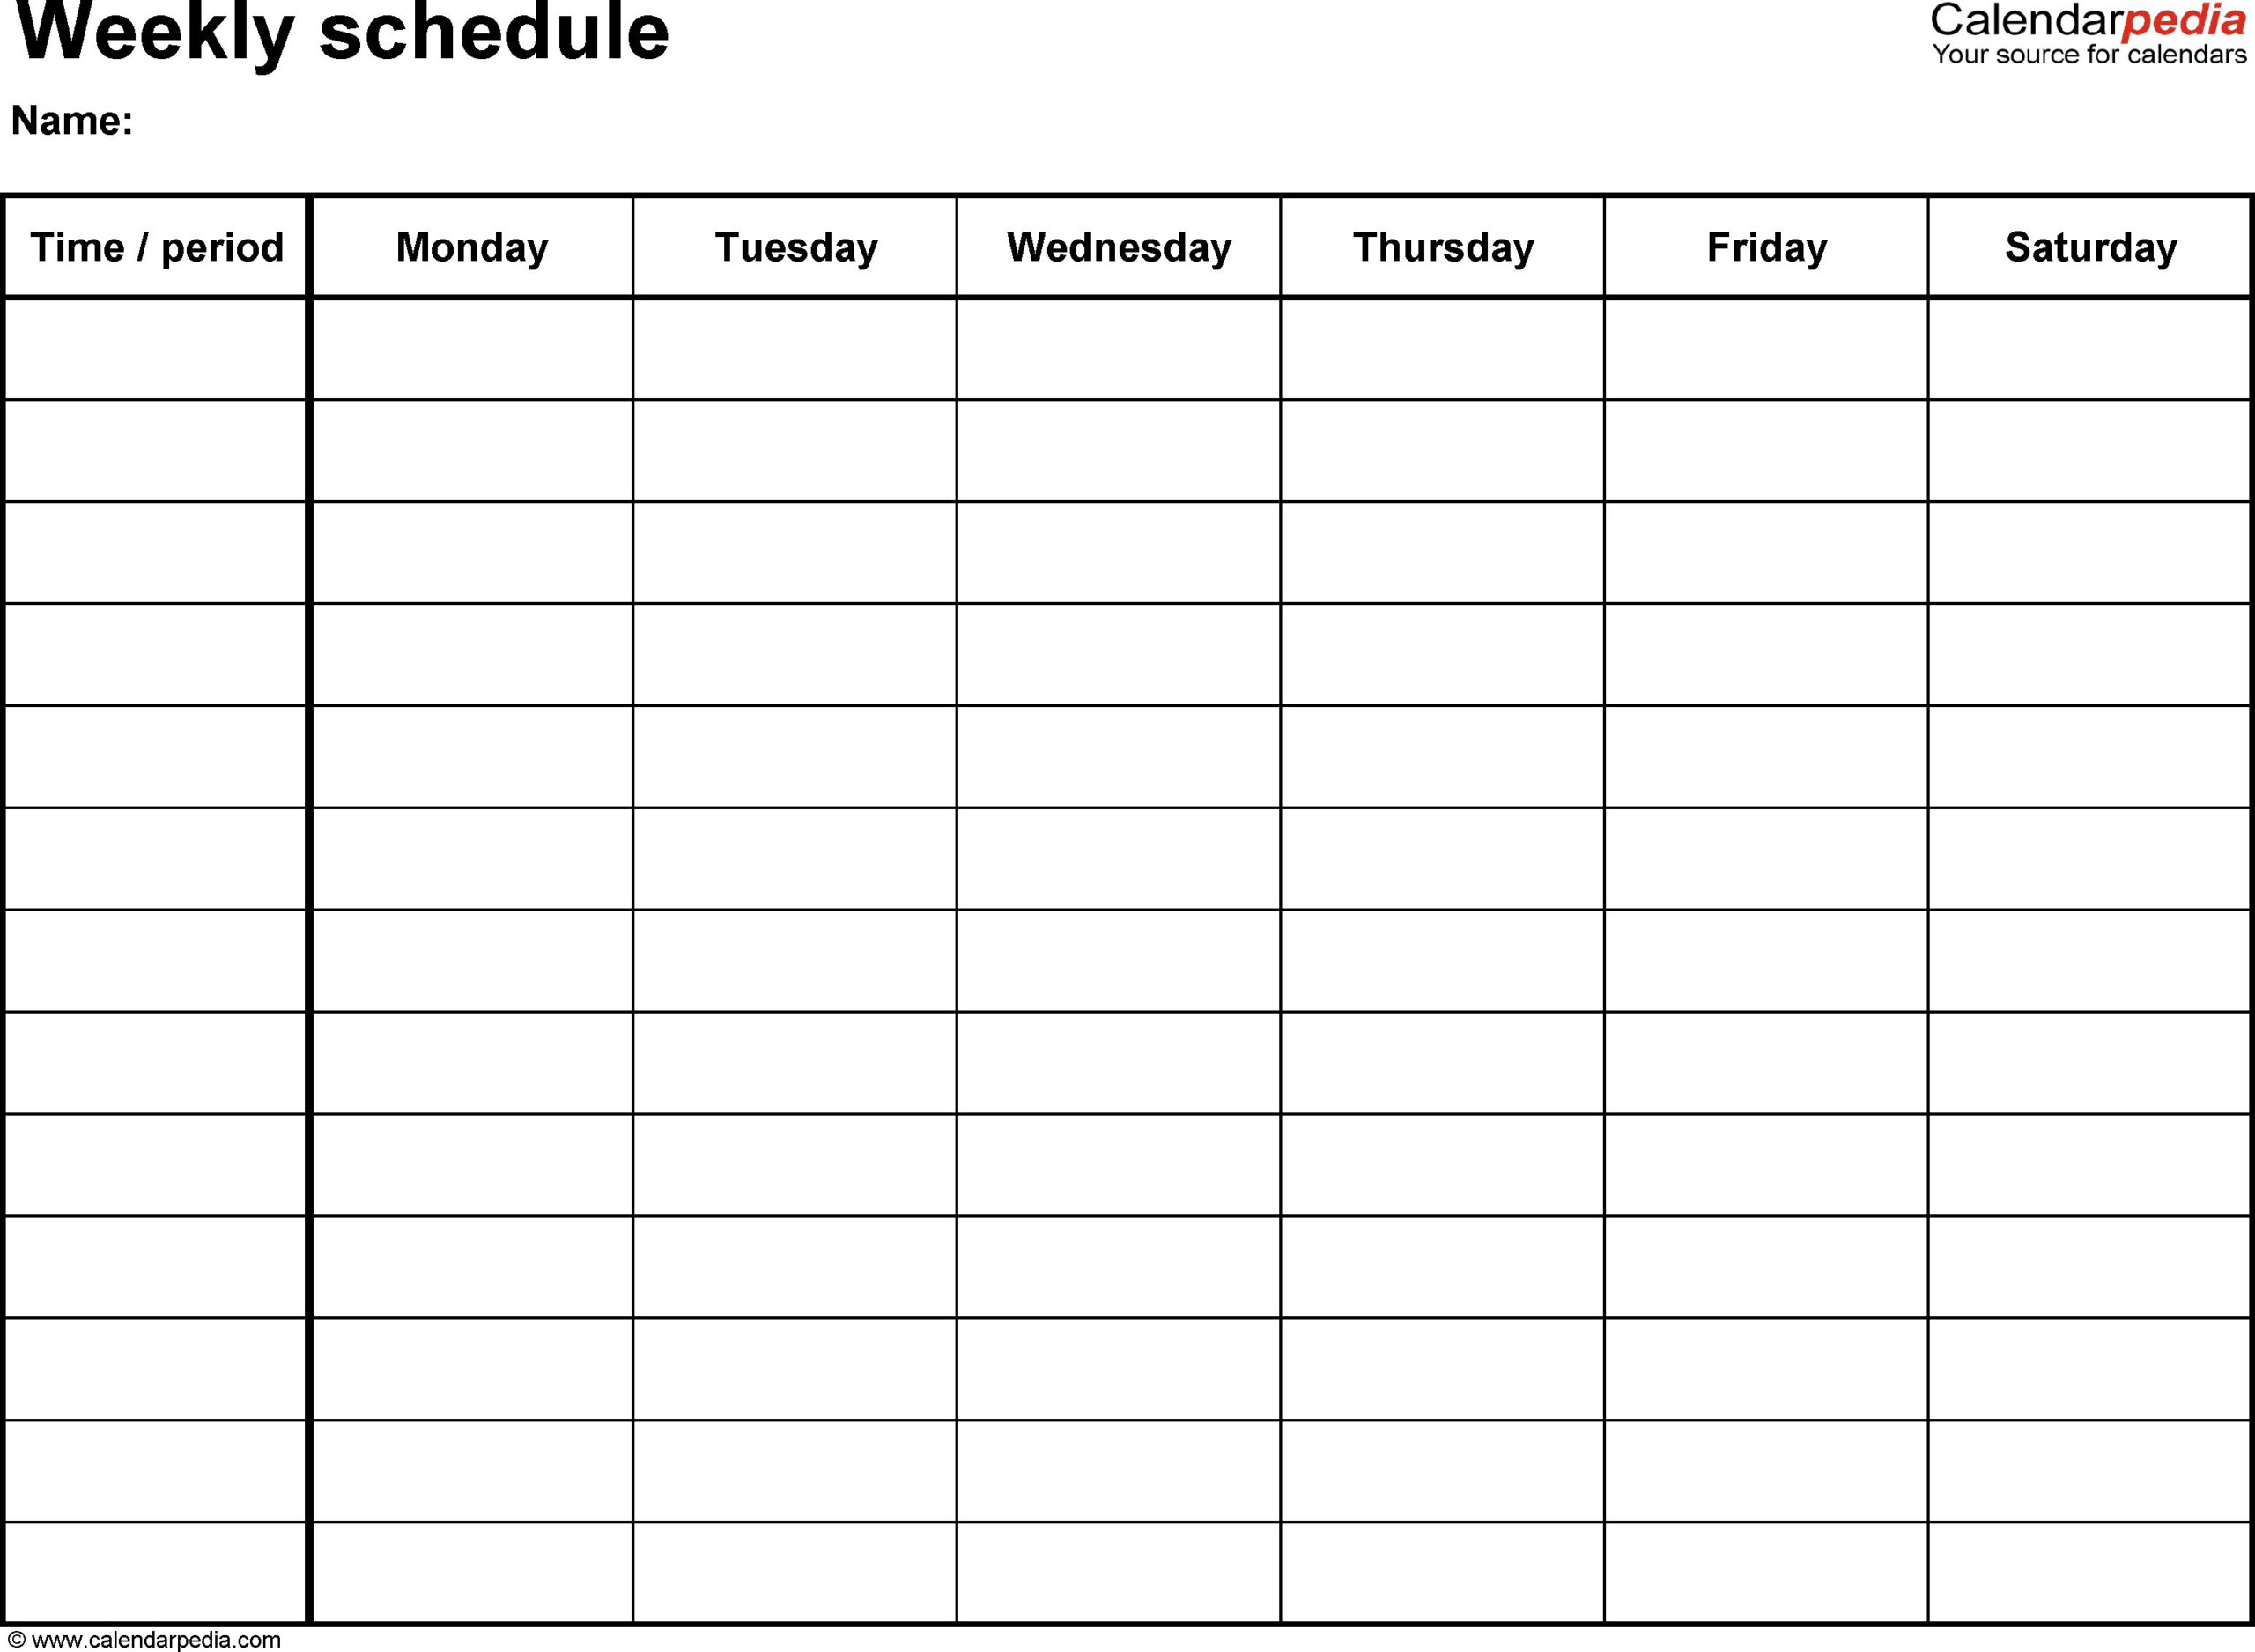 Week Calendar Monday To Sunday In 2020 | Weekly Calendar